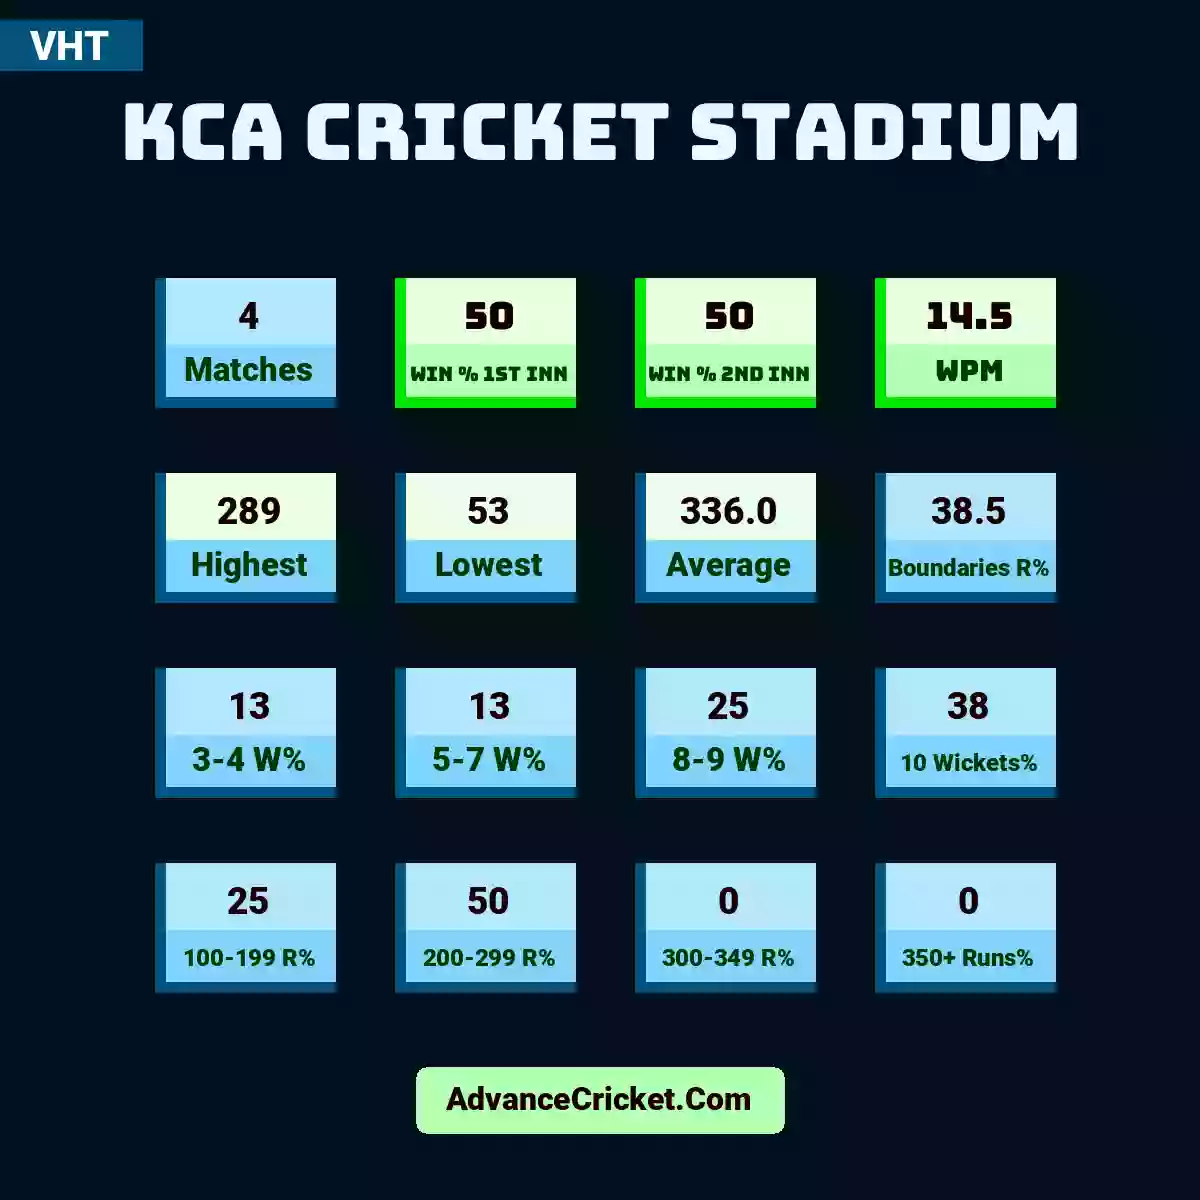 Image showing KCA Cricket Stadium with Matches: 4, Win % 1st Inn: 50, Win % 2nd Inn: 50, WPM: 14.5, Highest: 289, Lowest: 53, Average: 336.0, Boundaries R%: 38.5, 3-4 W%: 13, 5-7 W%: 13, 8-9 W%: 25, 10 Wickets%: 38, 100-199 R%: 25, 200-299 R%: 50, 300-349 R%: 0, 350+ Runs%: 0.